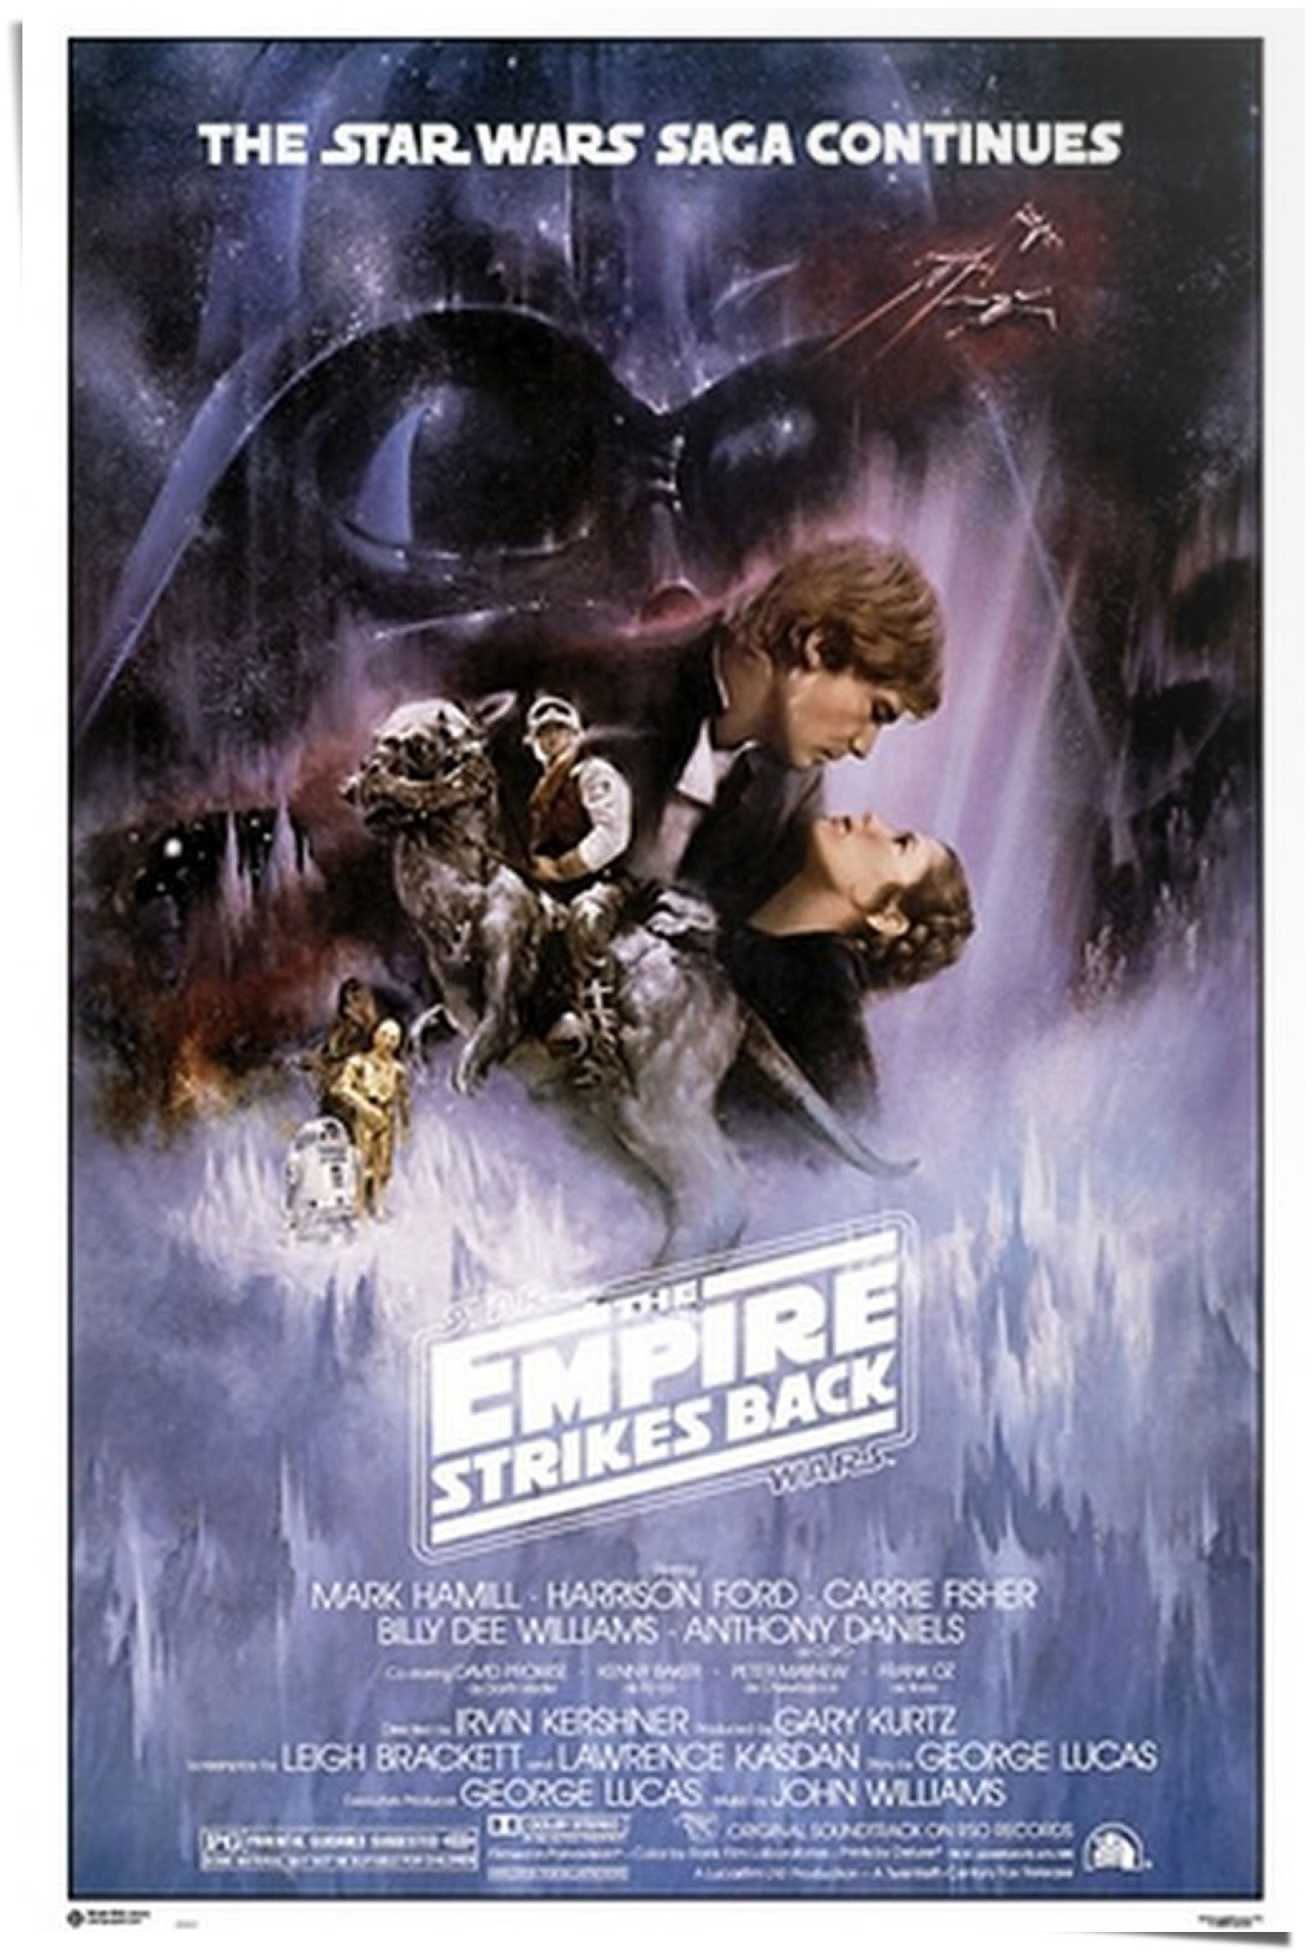 Wars Star back Reinders! empire - Poster strikes